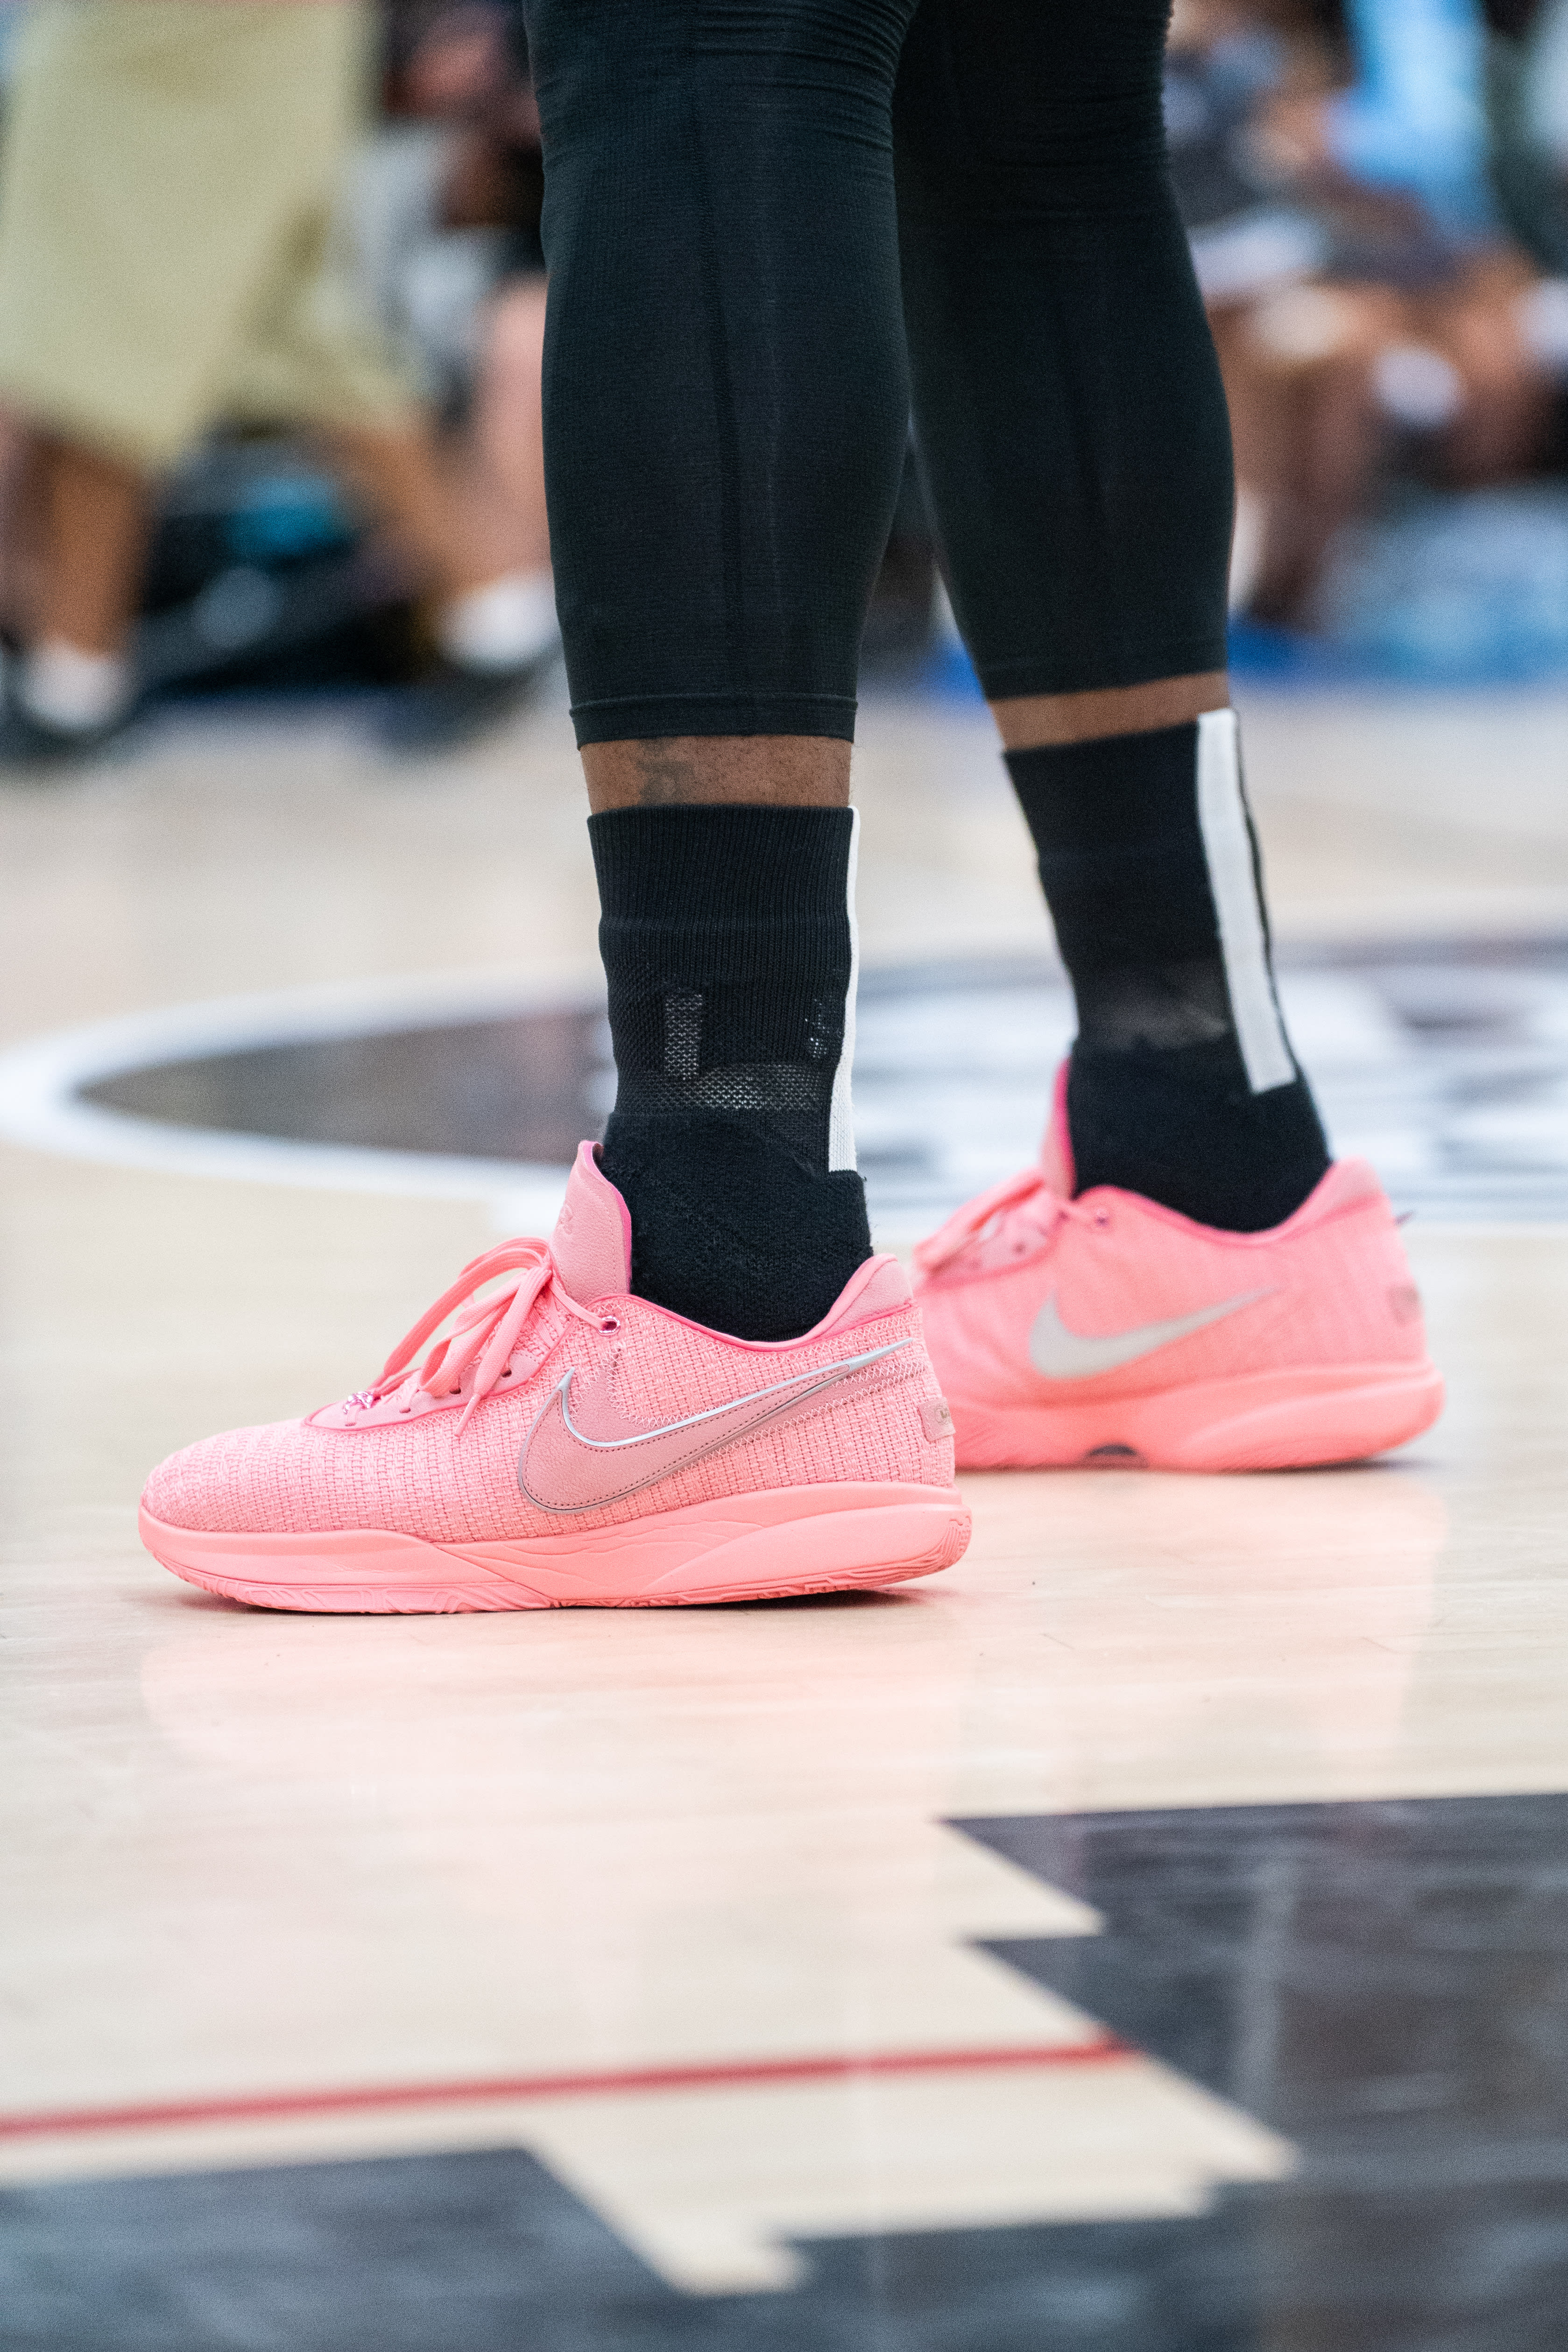 LeBron James Wearing the Nike LeBron 20 Pink in Drew League July 16, 2022